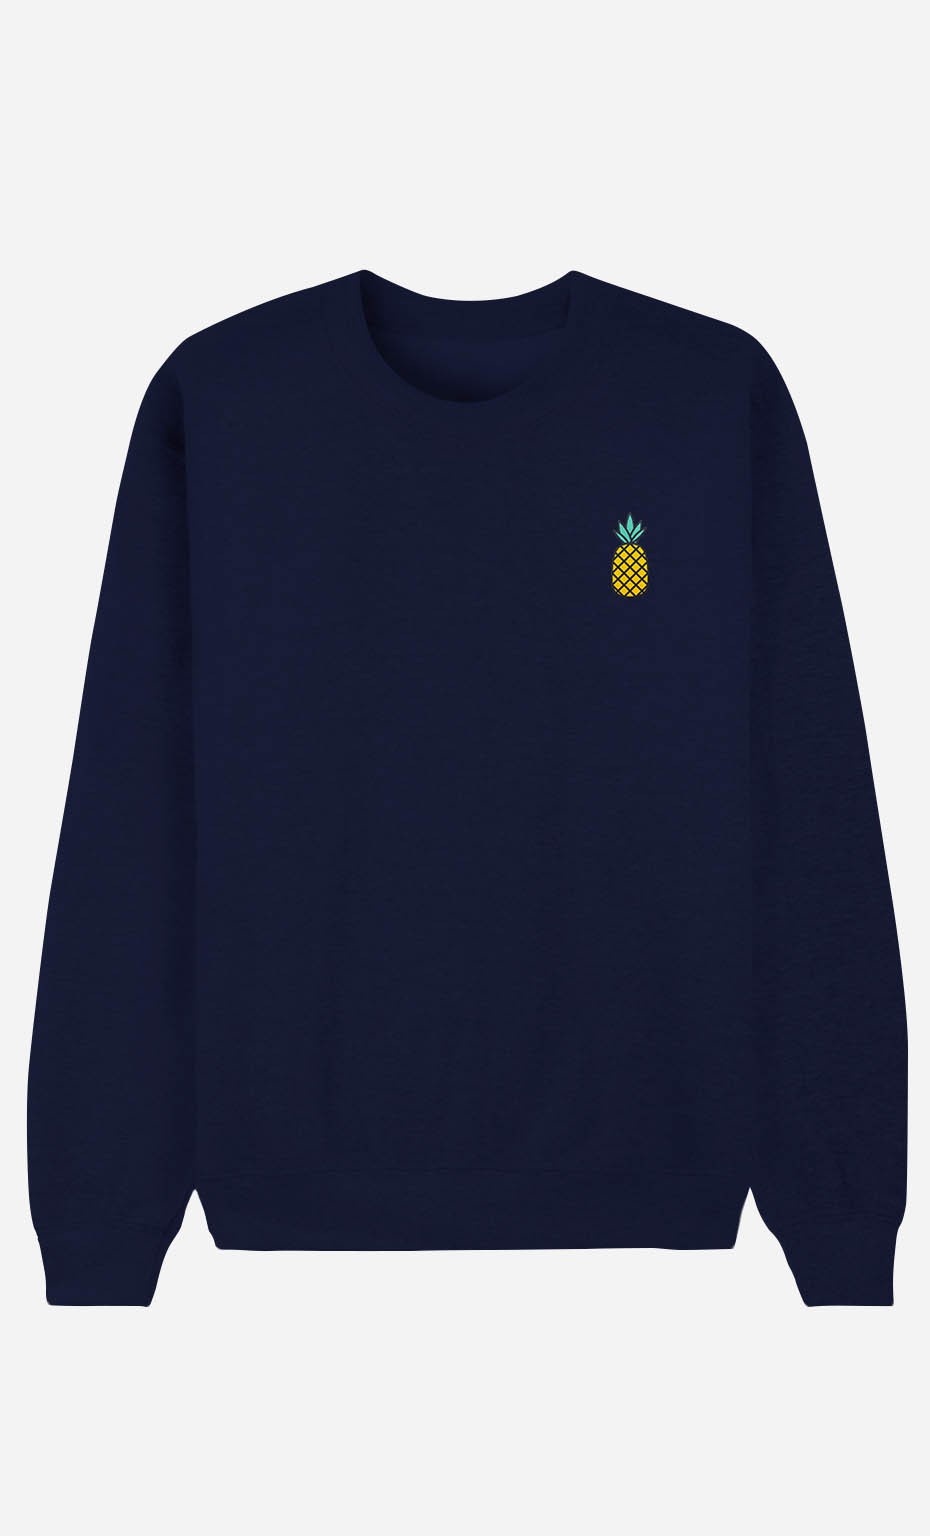 Blue Sweatshirt Pineapple - embroidered